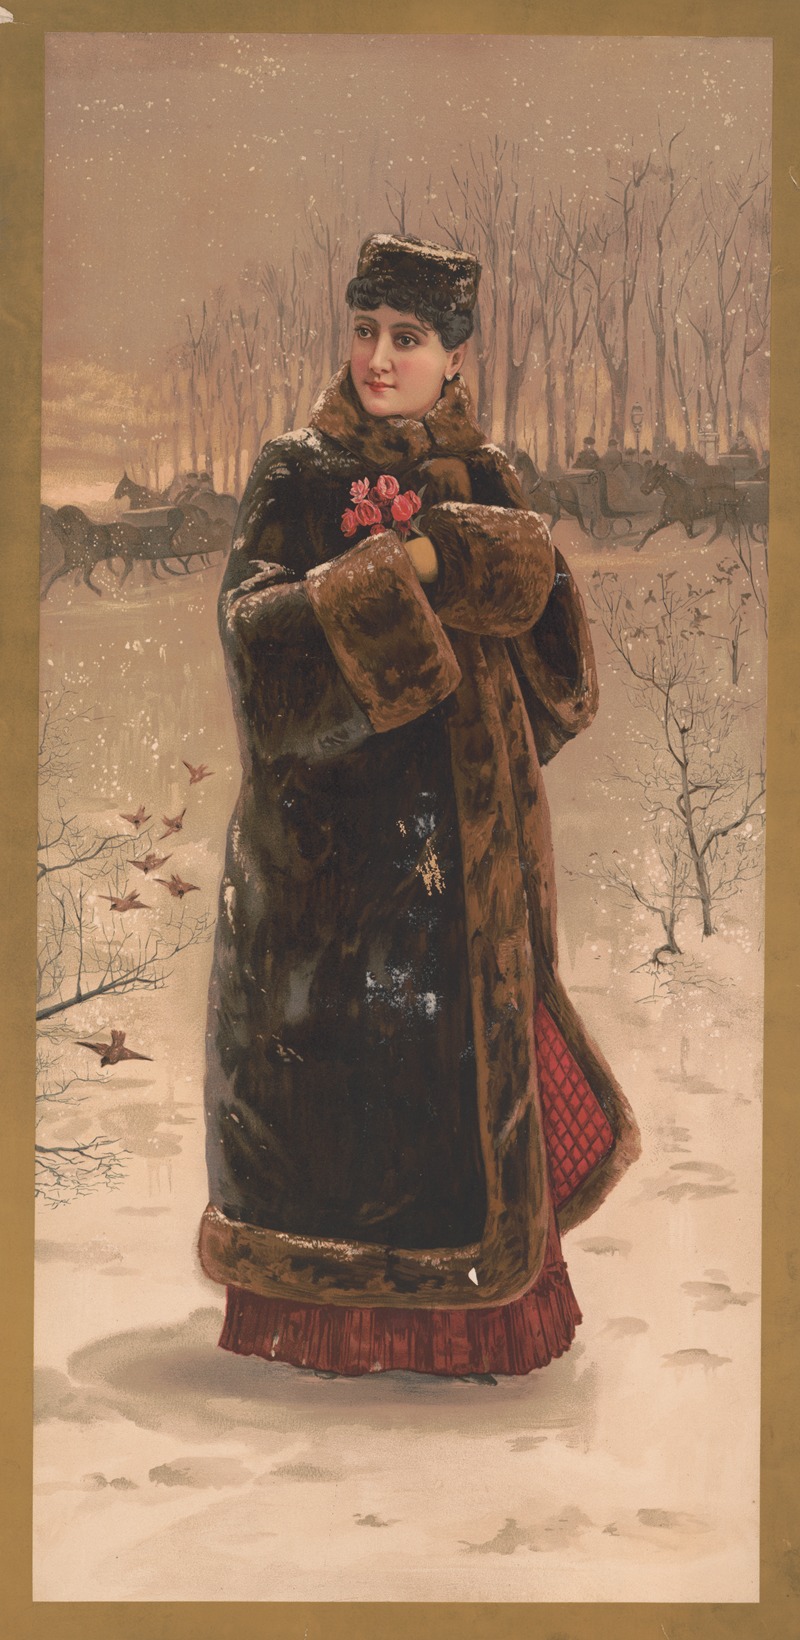 Julius Bien & Company - Woman in fur coat with muff